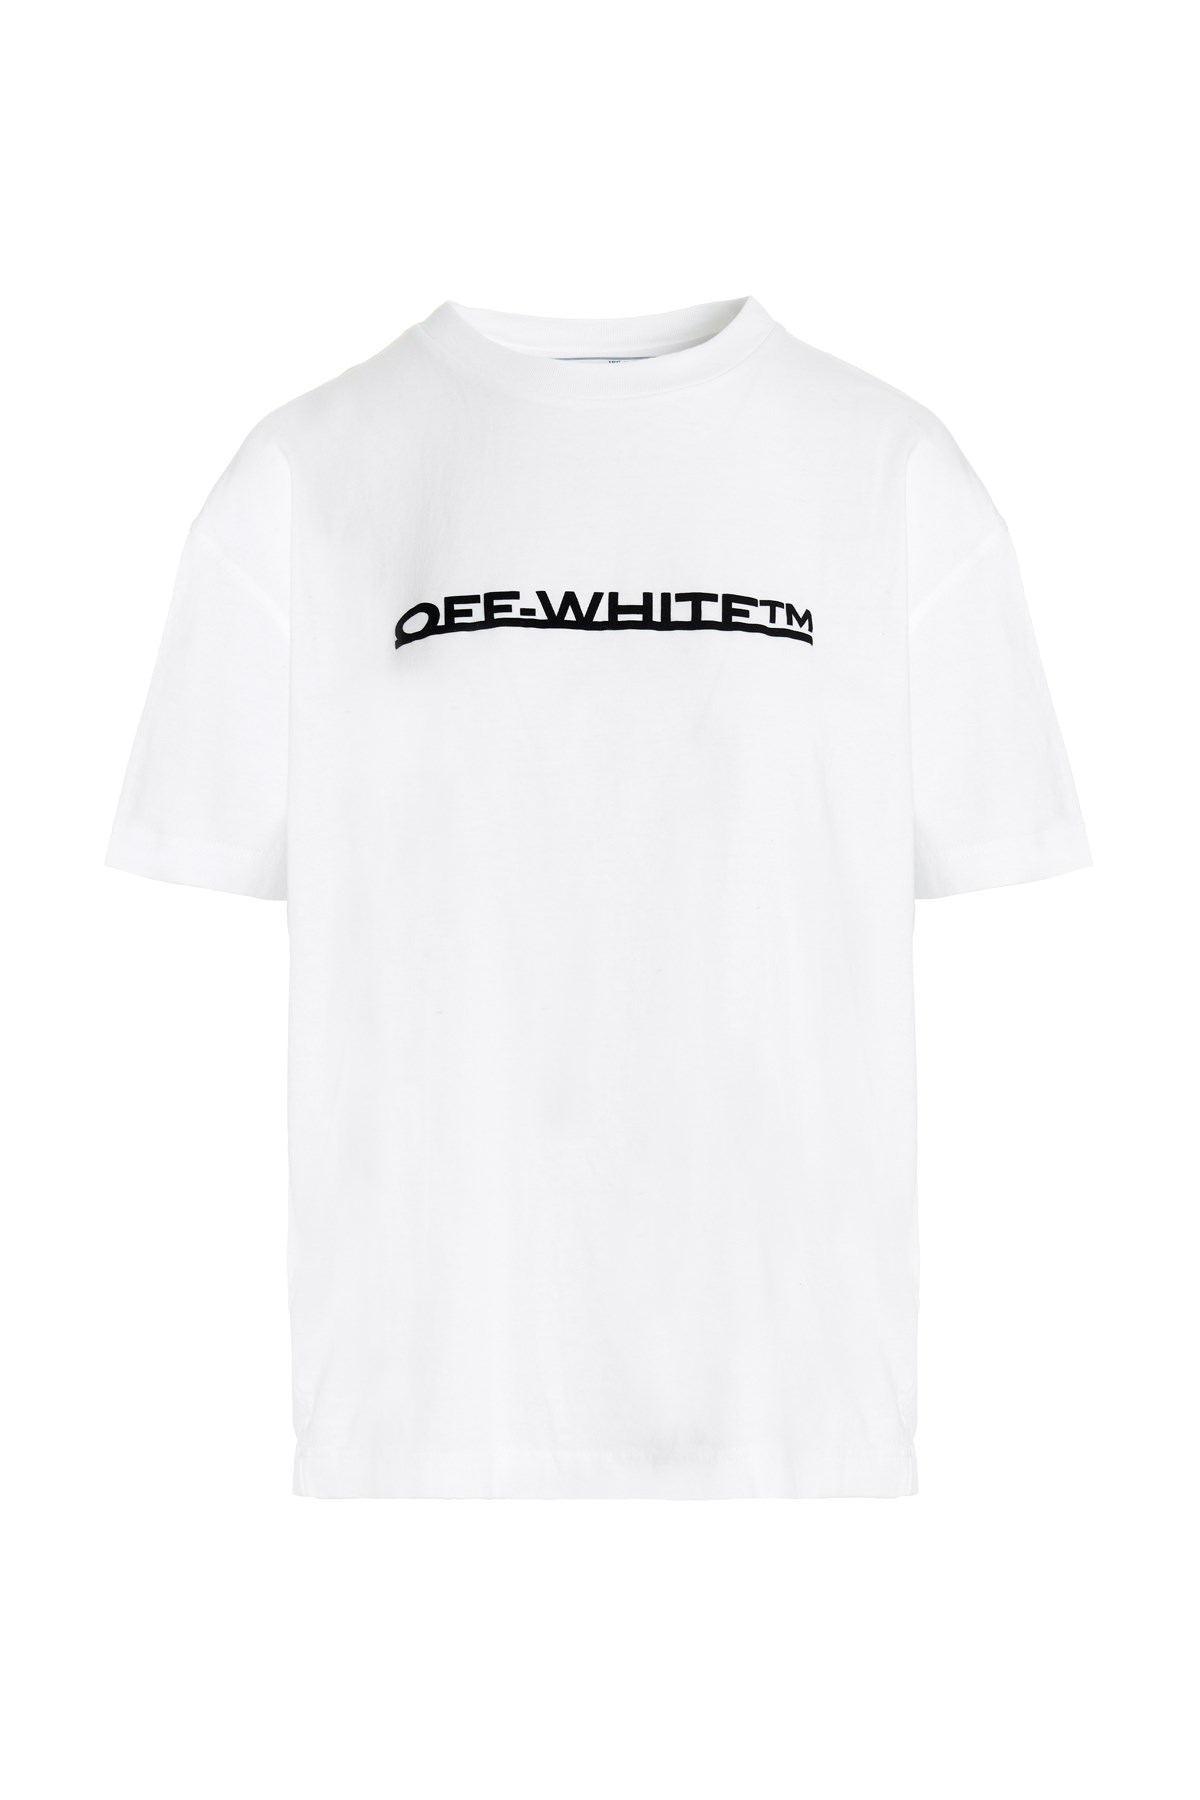 OFF-WHITE 'Underlined Logo' T-Shirt